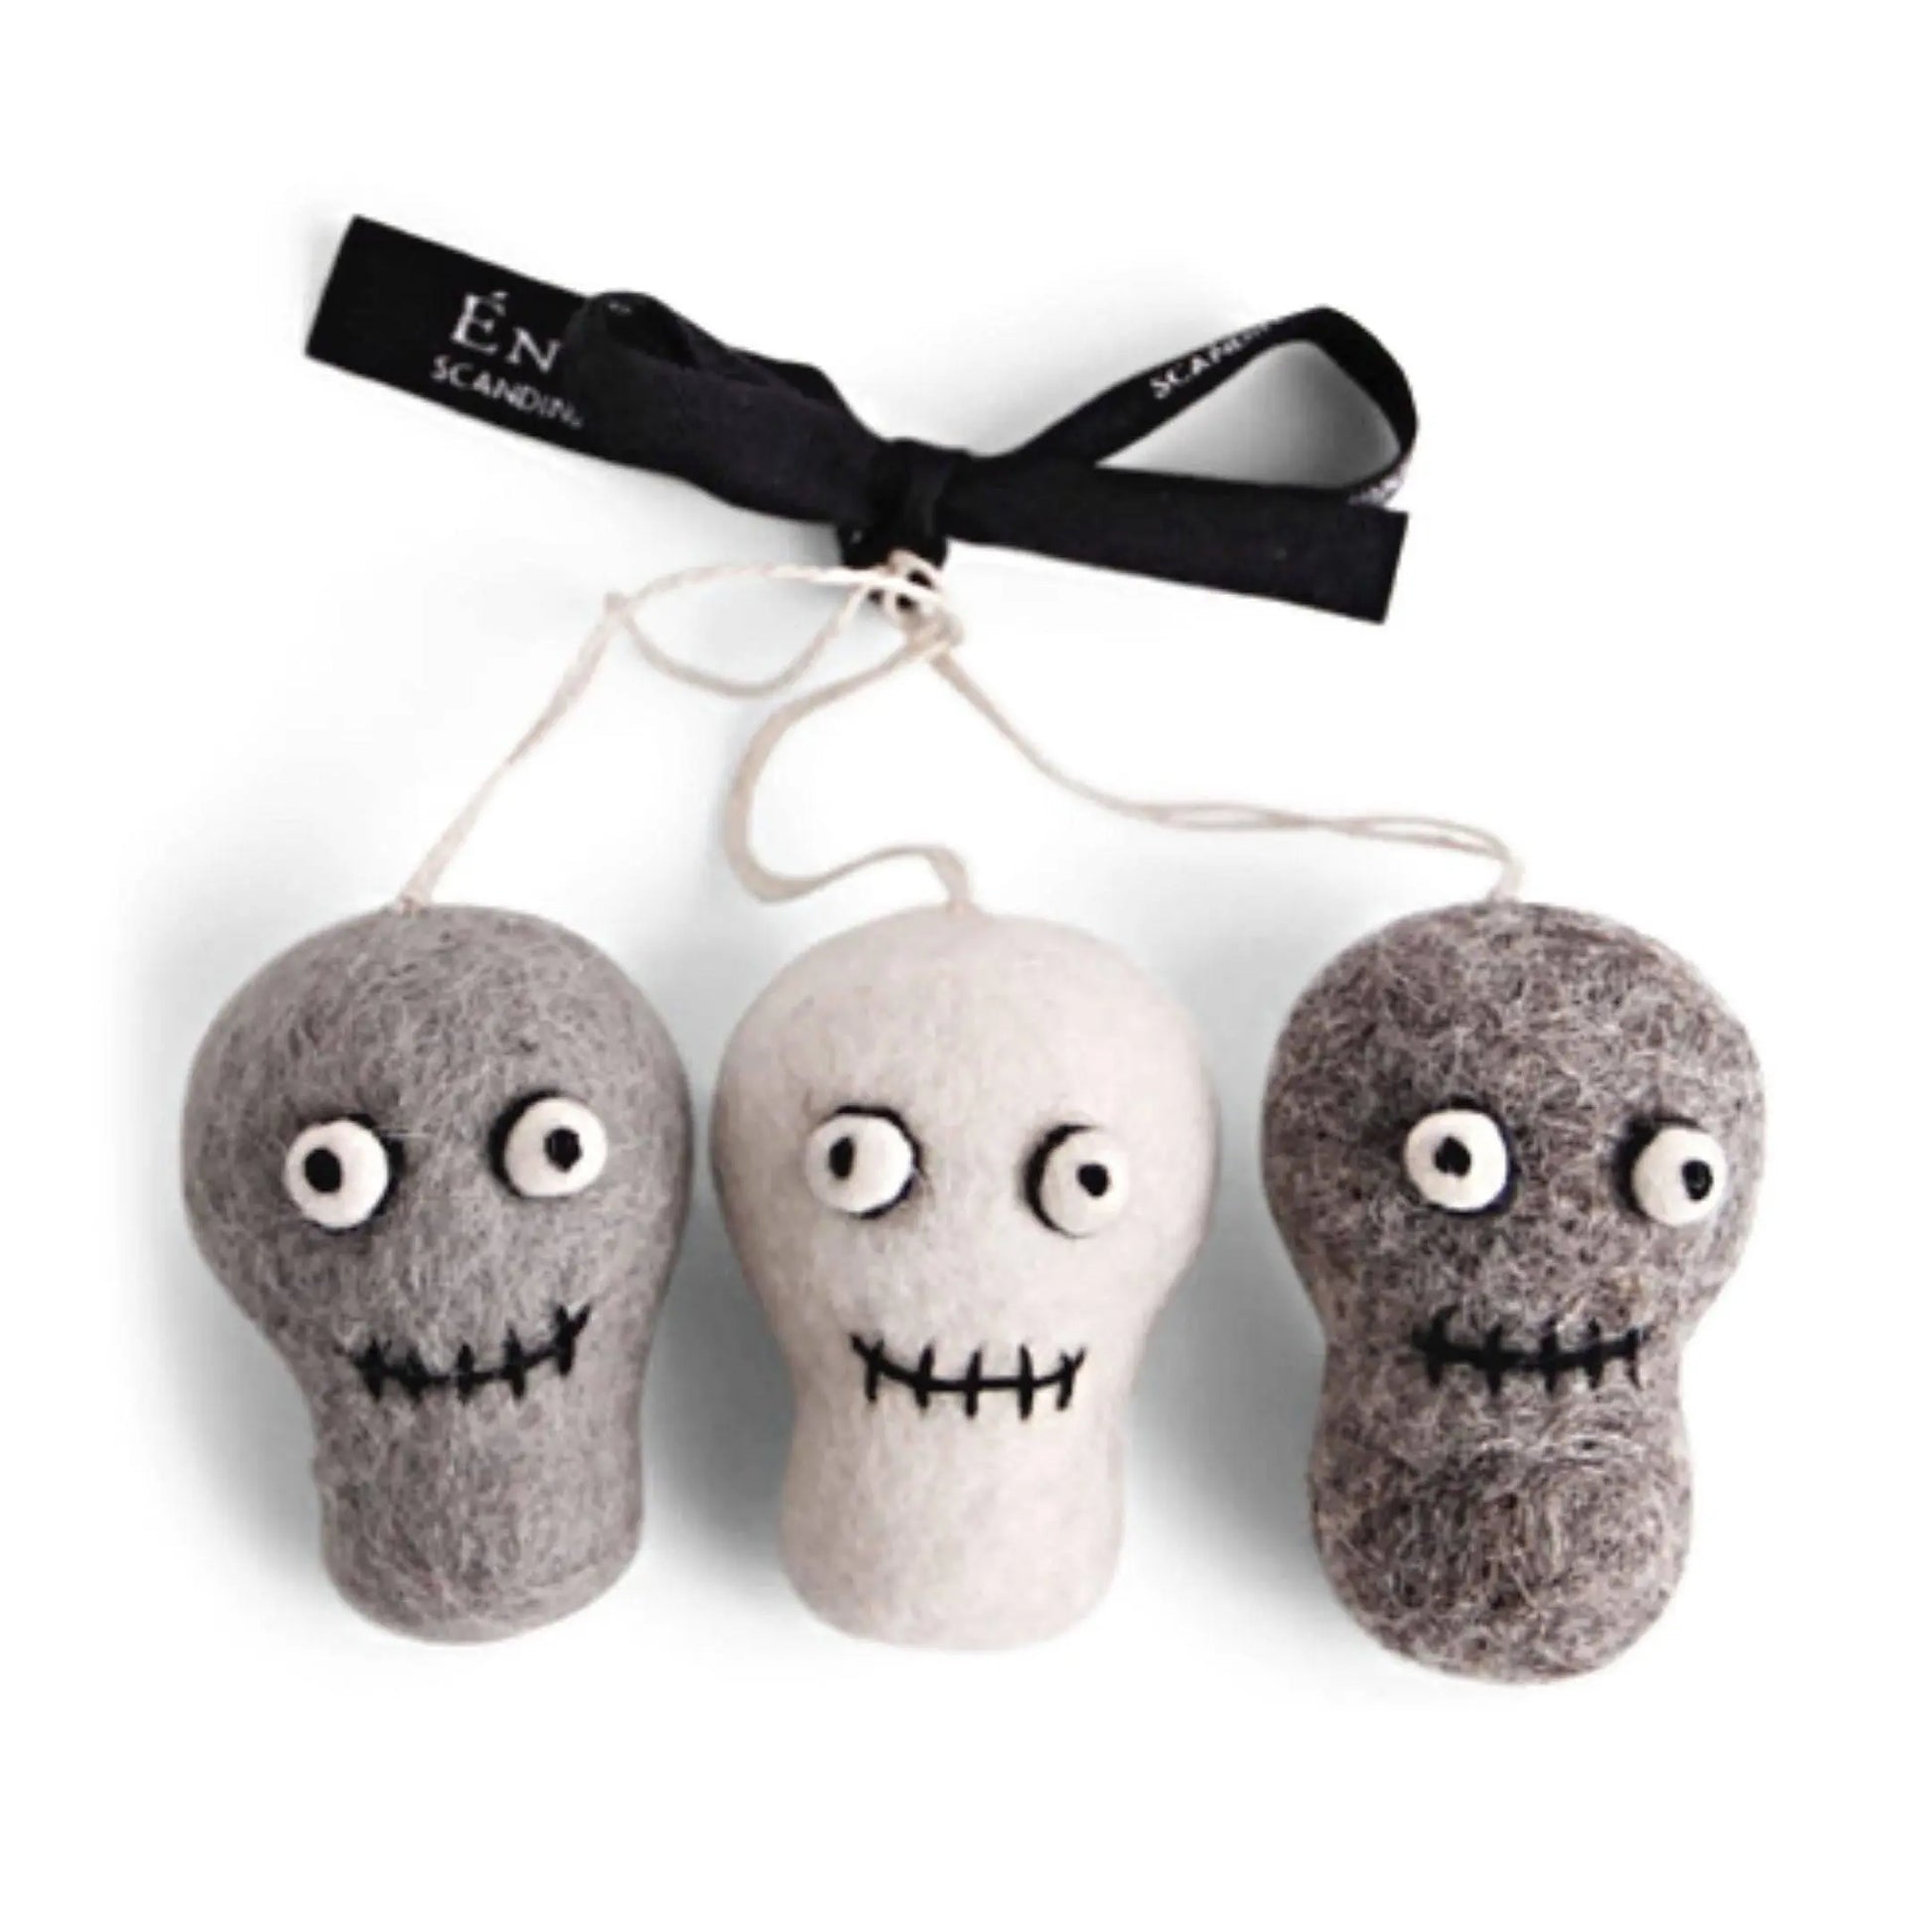 Gry & Sif Halloween pendant skull set of 3 made of felt